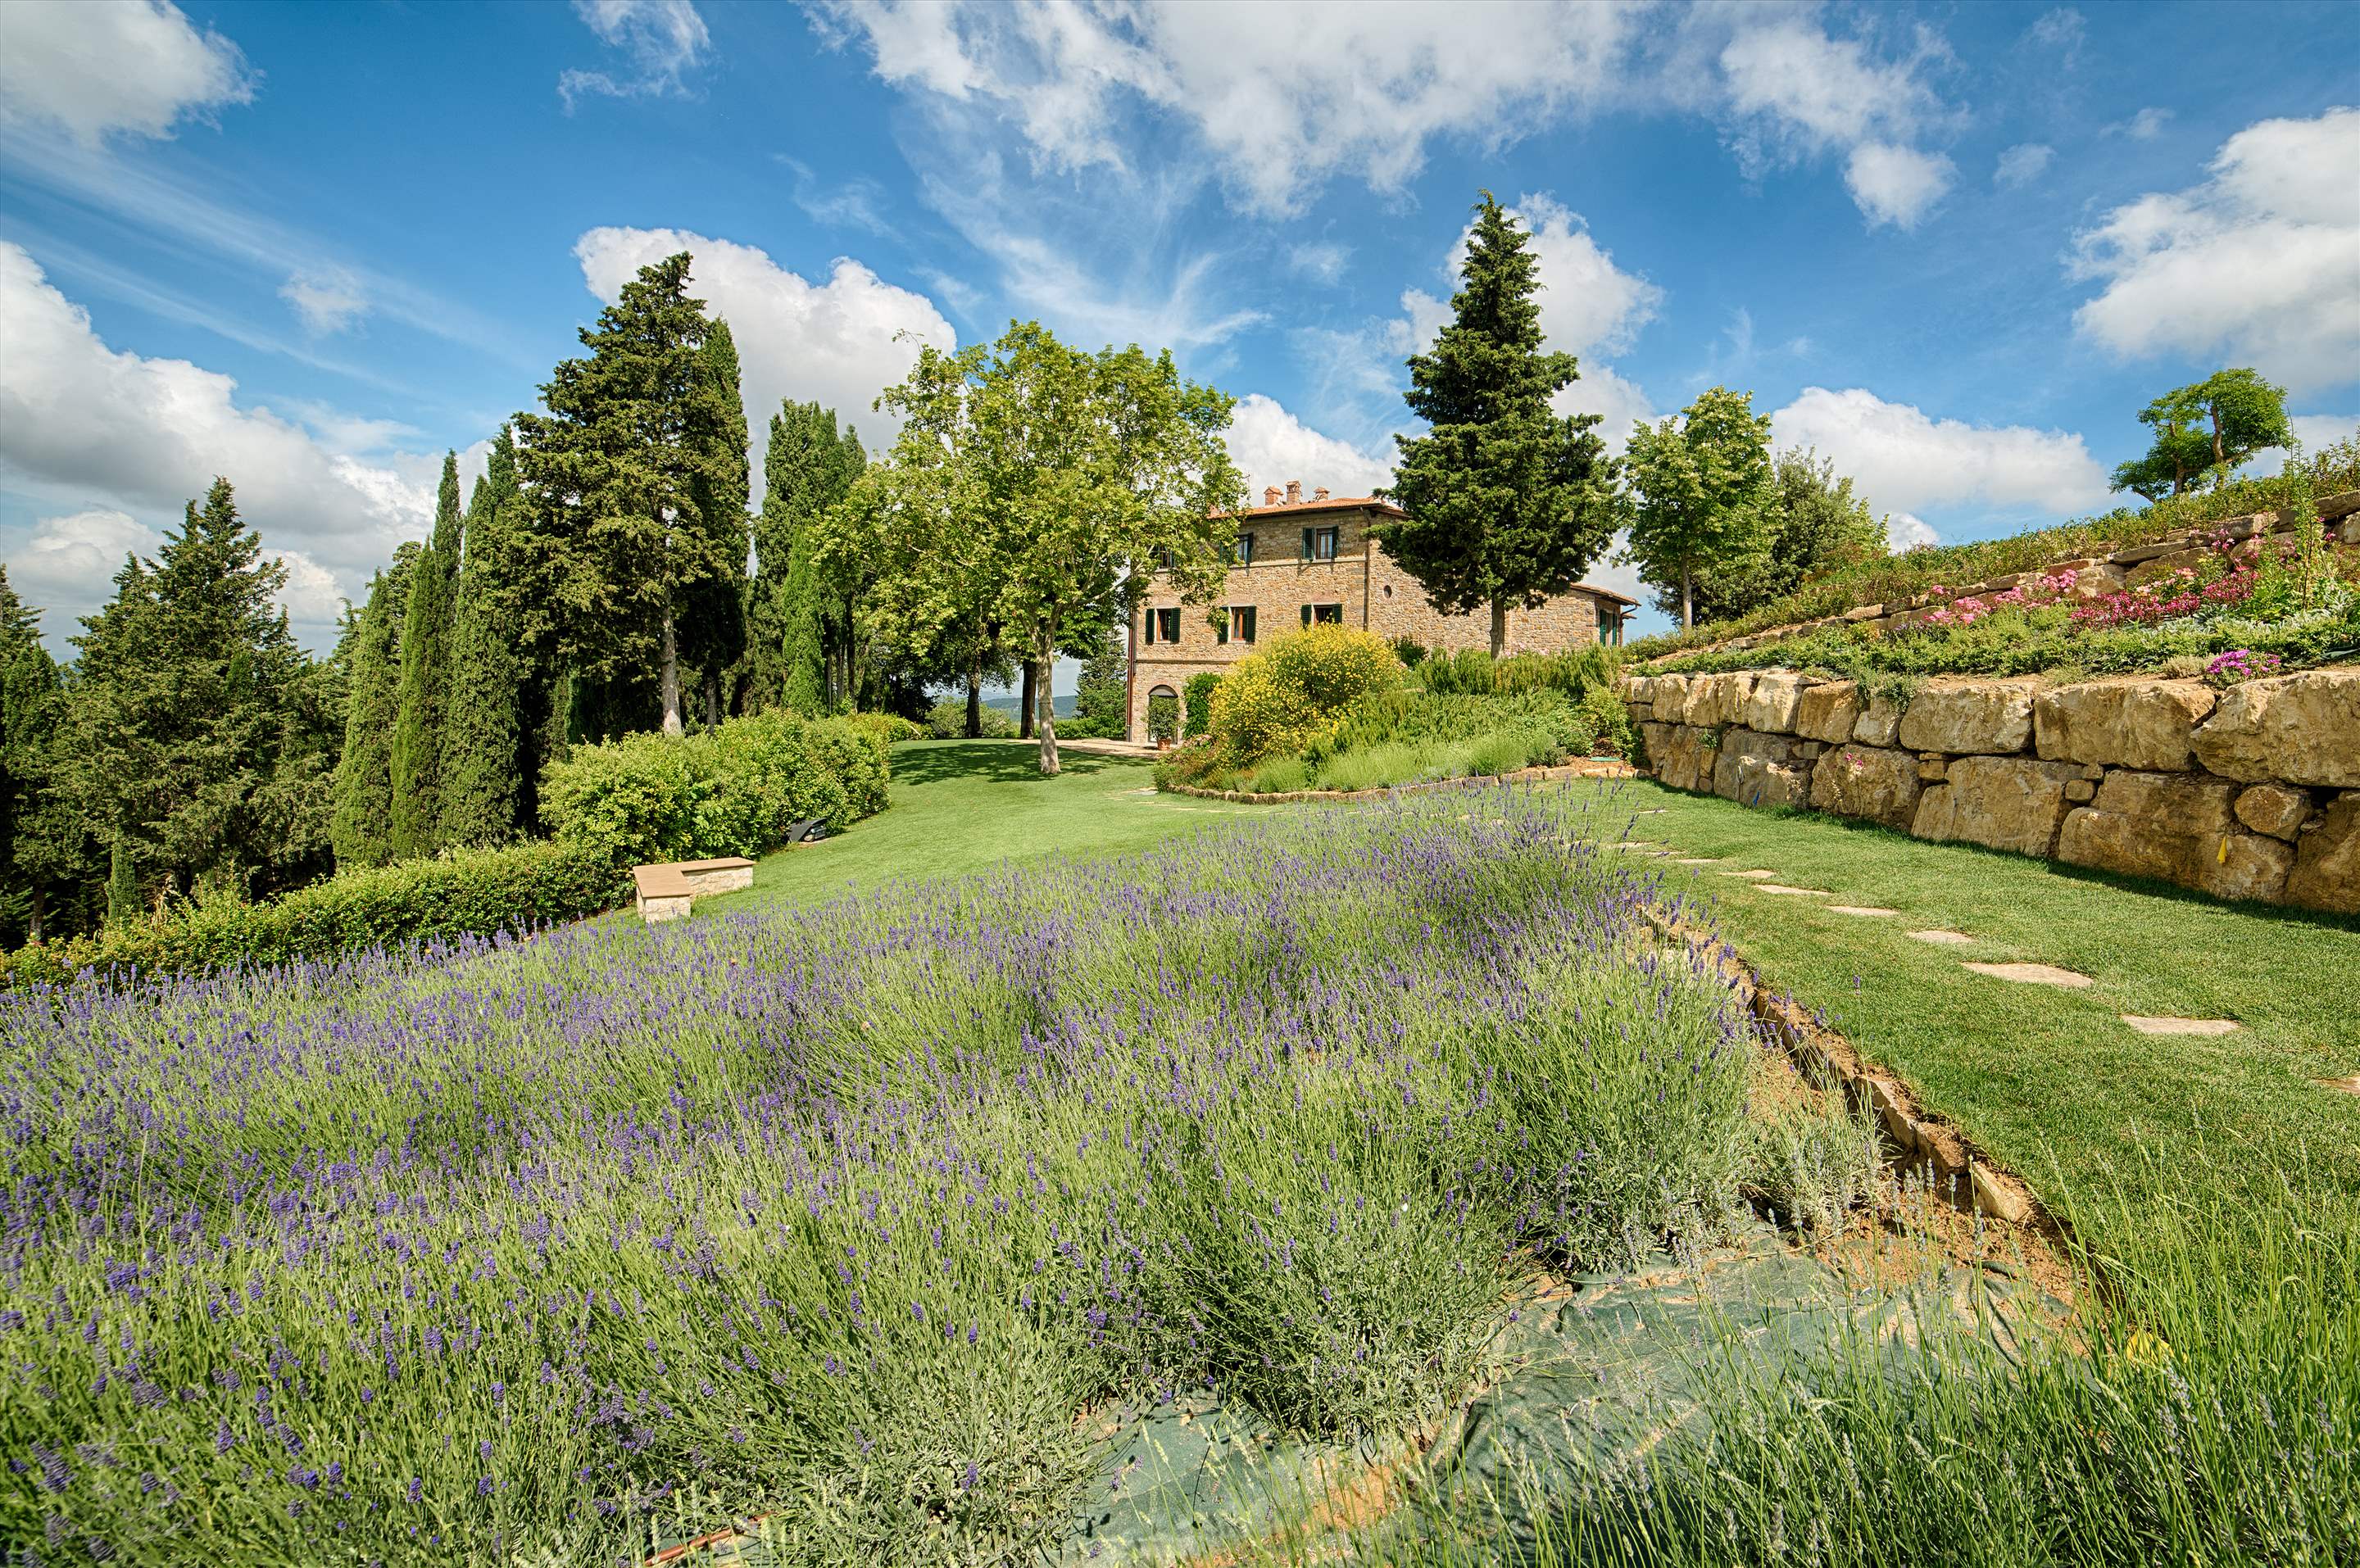 Villa La Valetta, 1 bed Apt Farfalla 2+2, 1 bedroom villa in Chianti & Countryside, Tuscany Photo #2